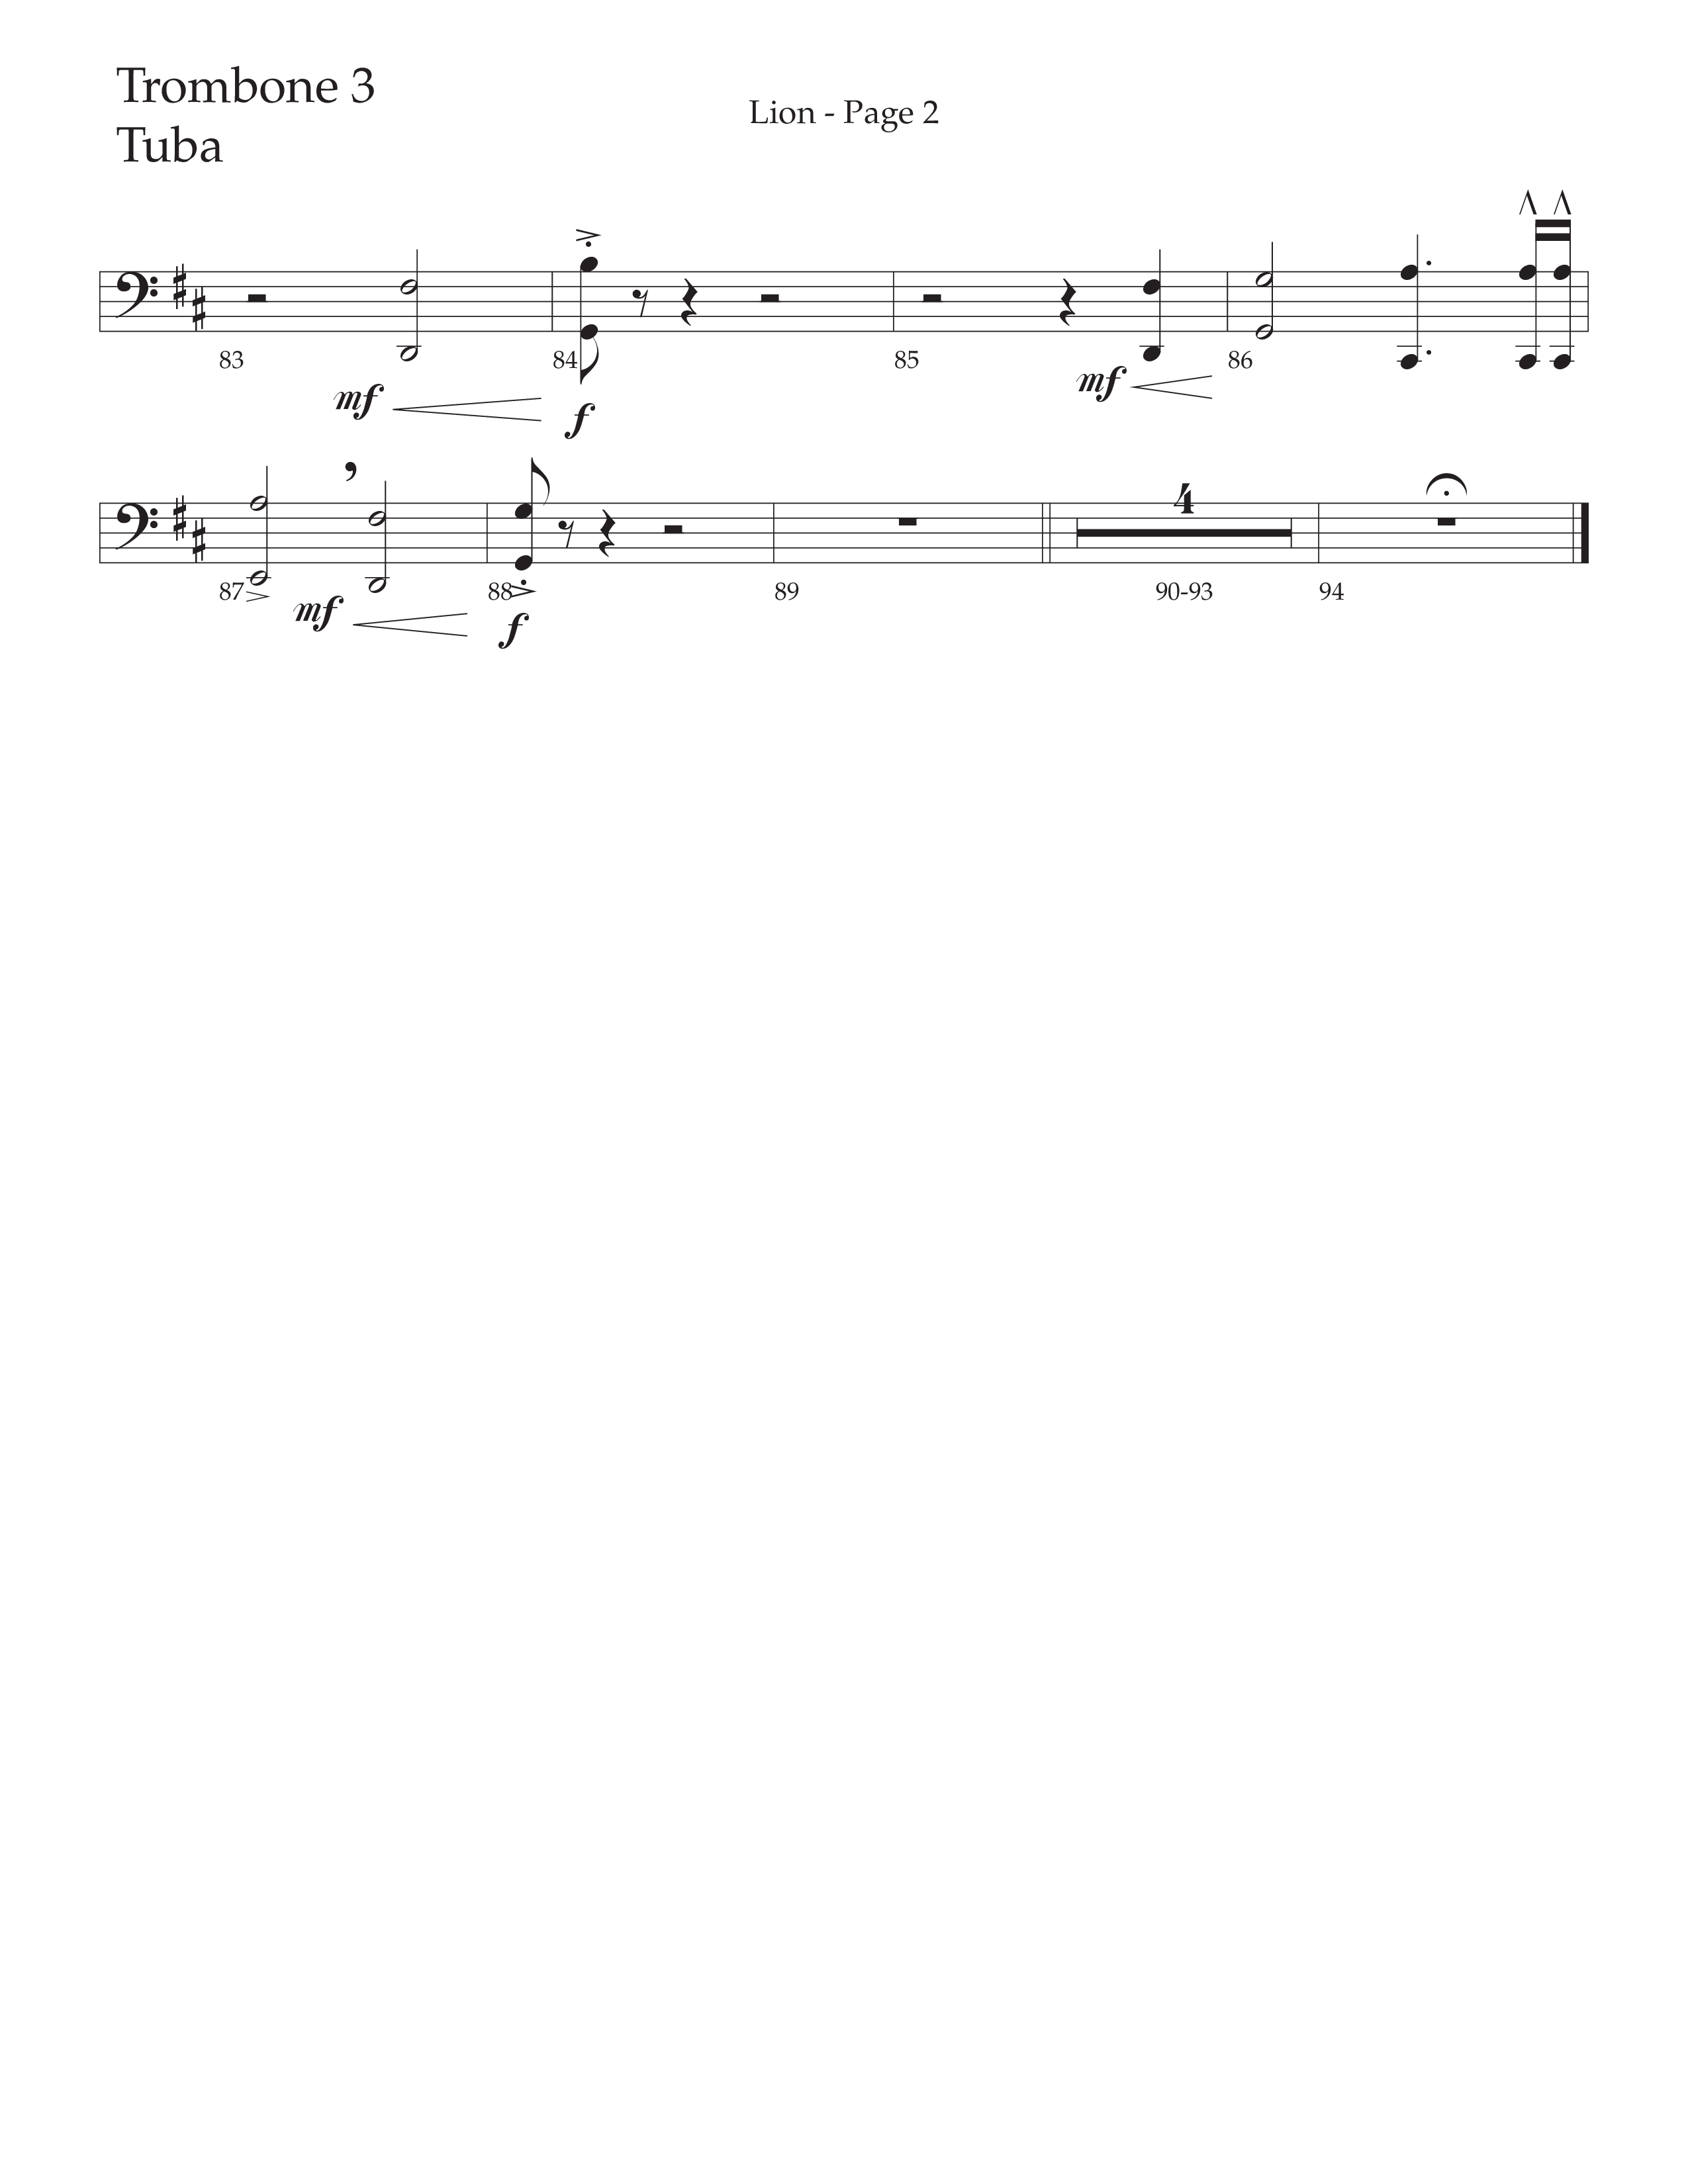 LION (Choral Anthem SATB) Trombone 3/Tuba (Daywind Worship / Arr. Phil Nitz)